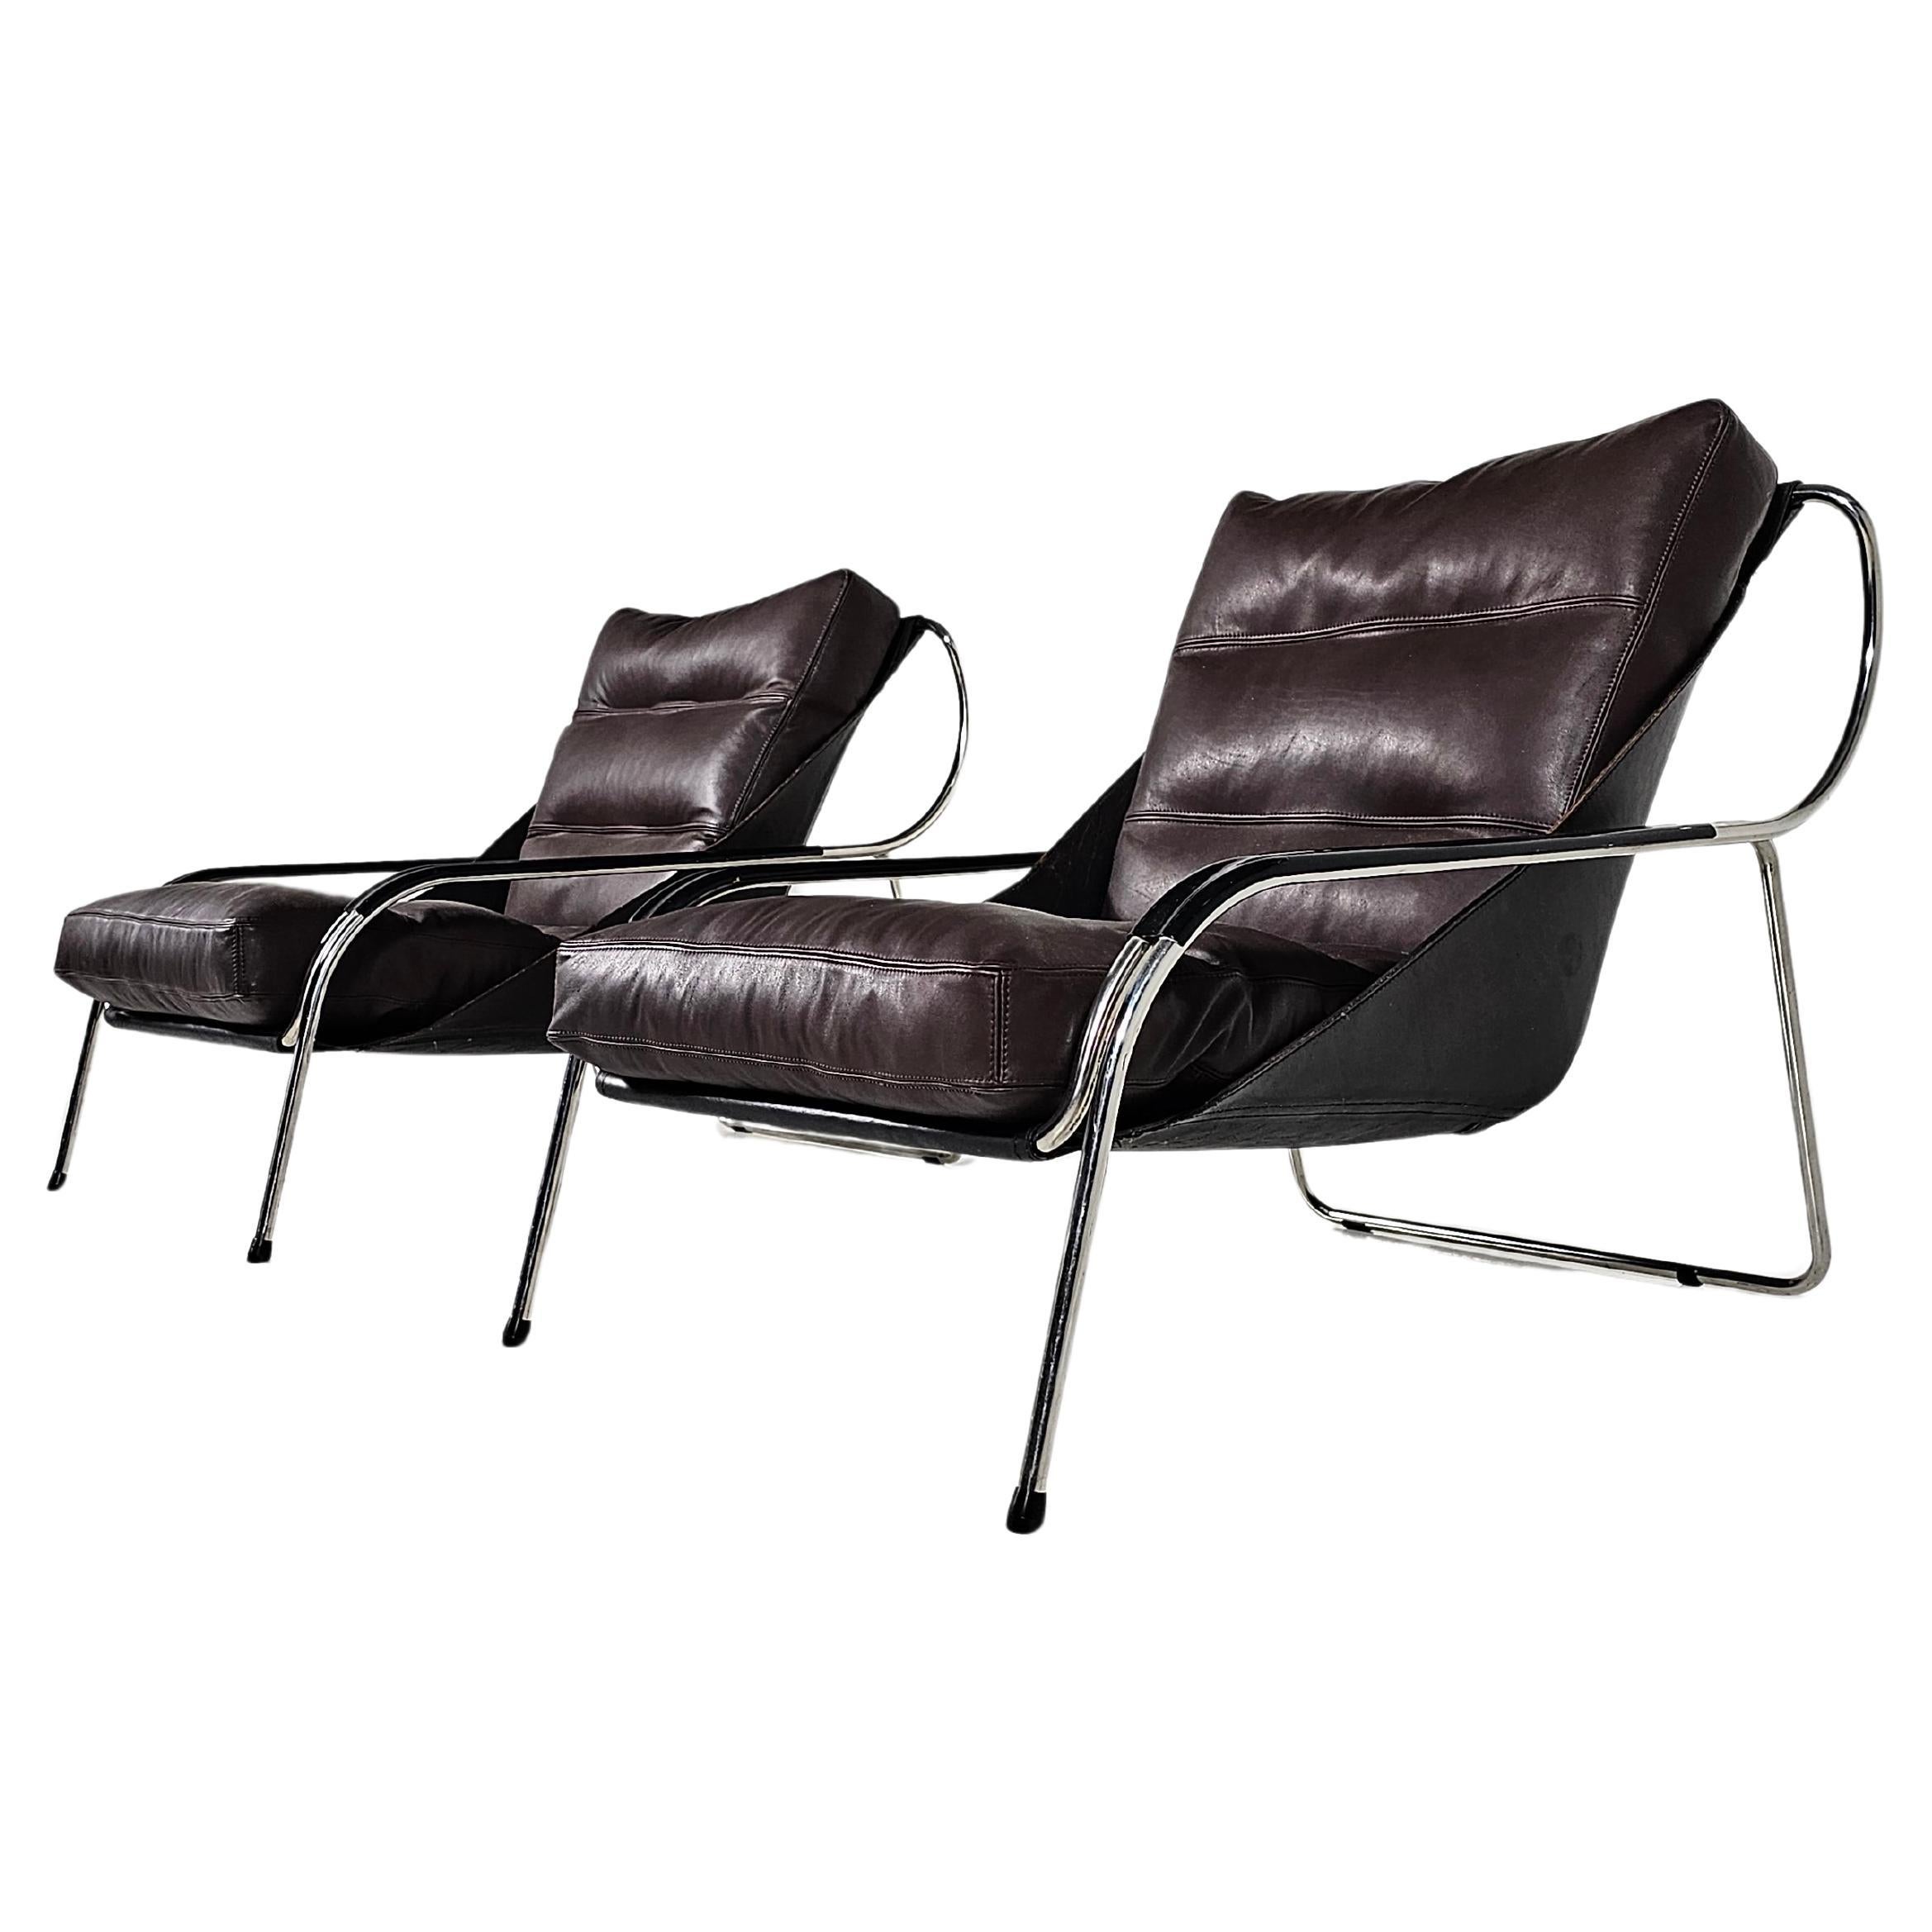  Marco Zanuso Maggiolina lounge chairs in brown and black leather, Zanotta, 1950 For Sale